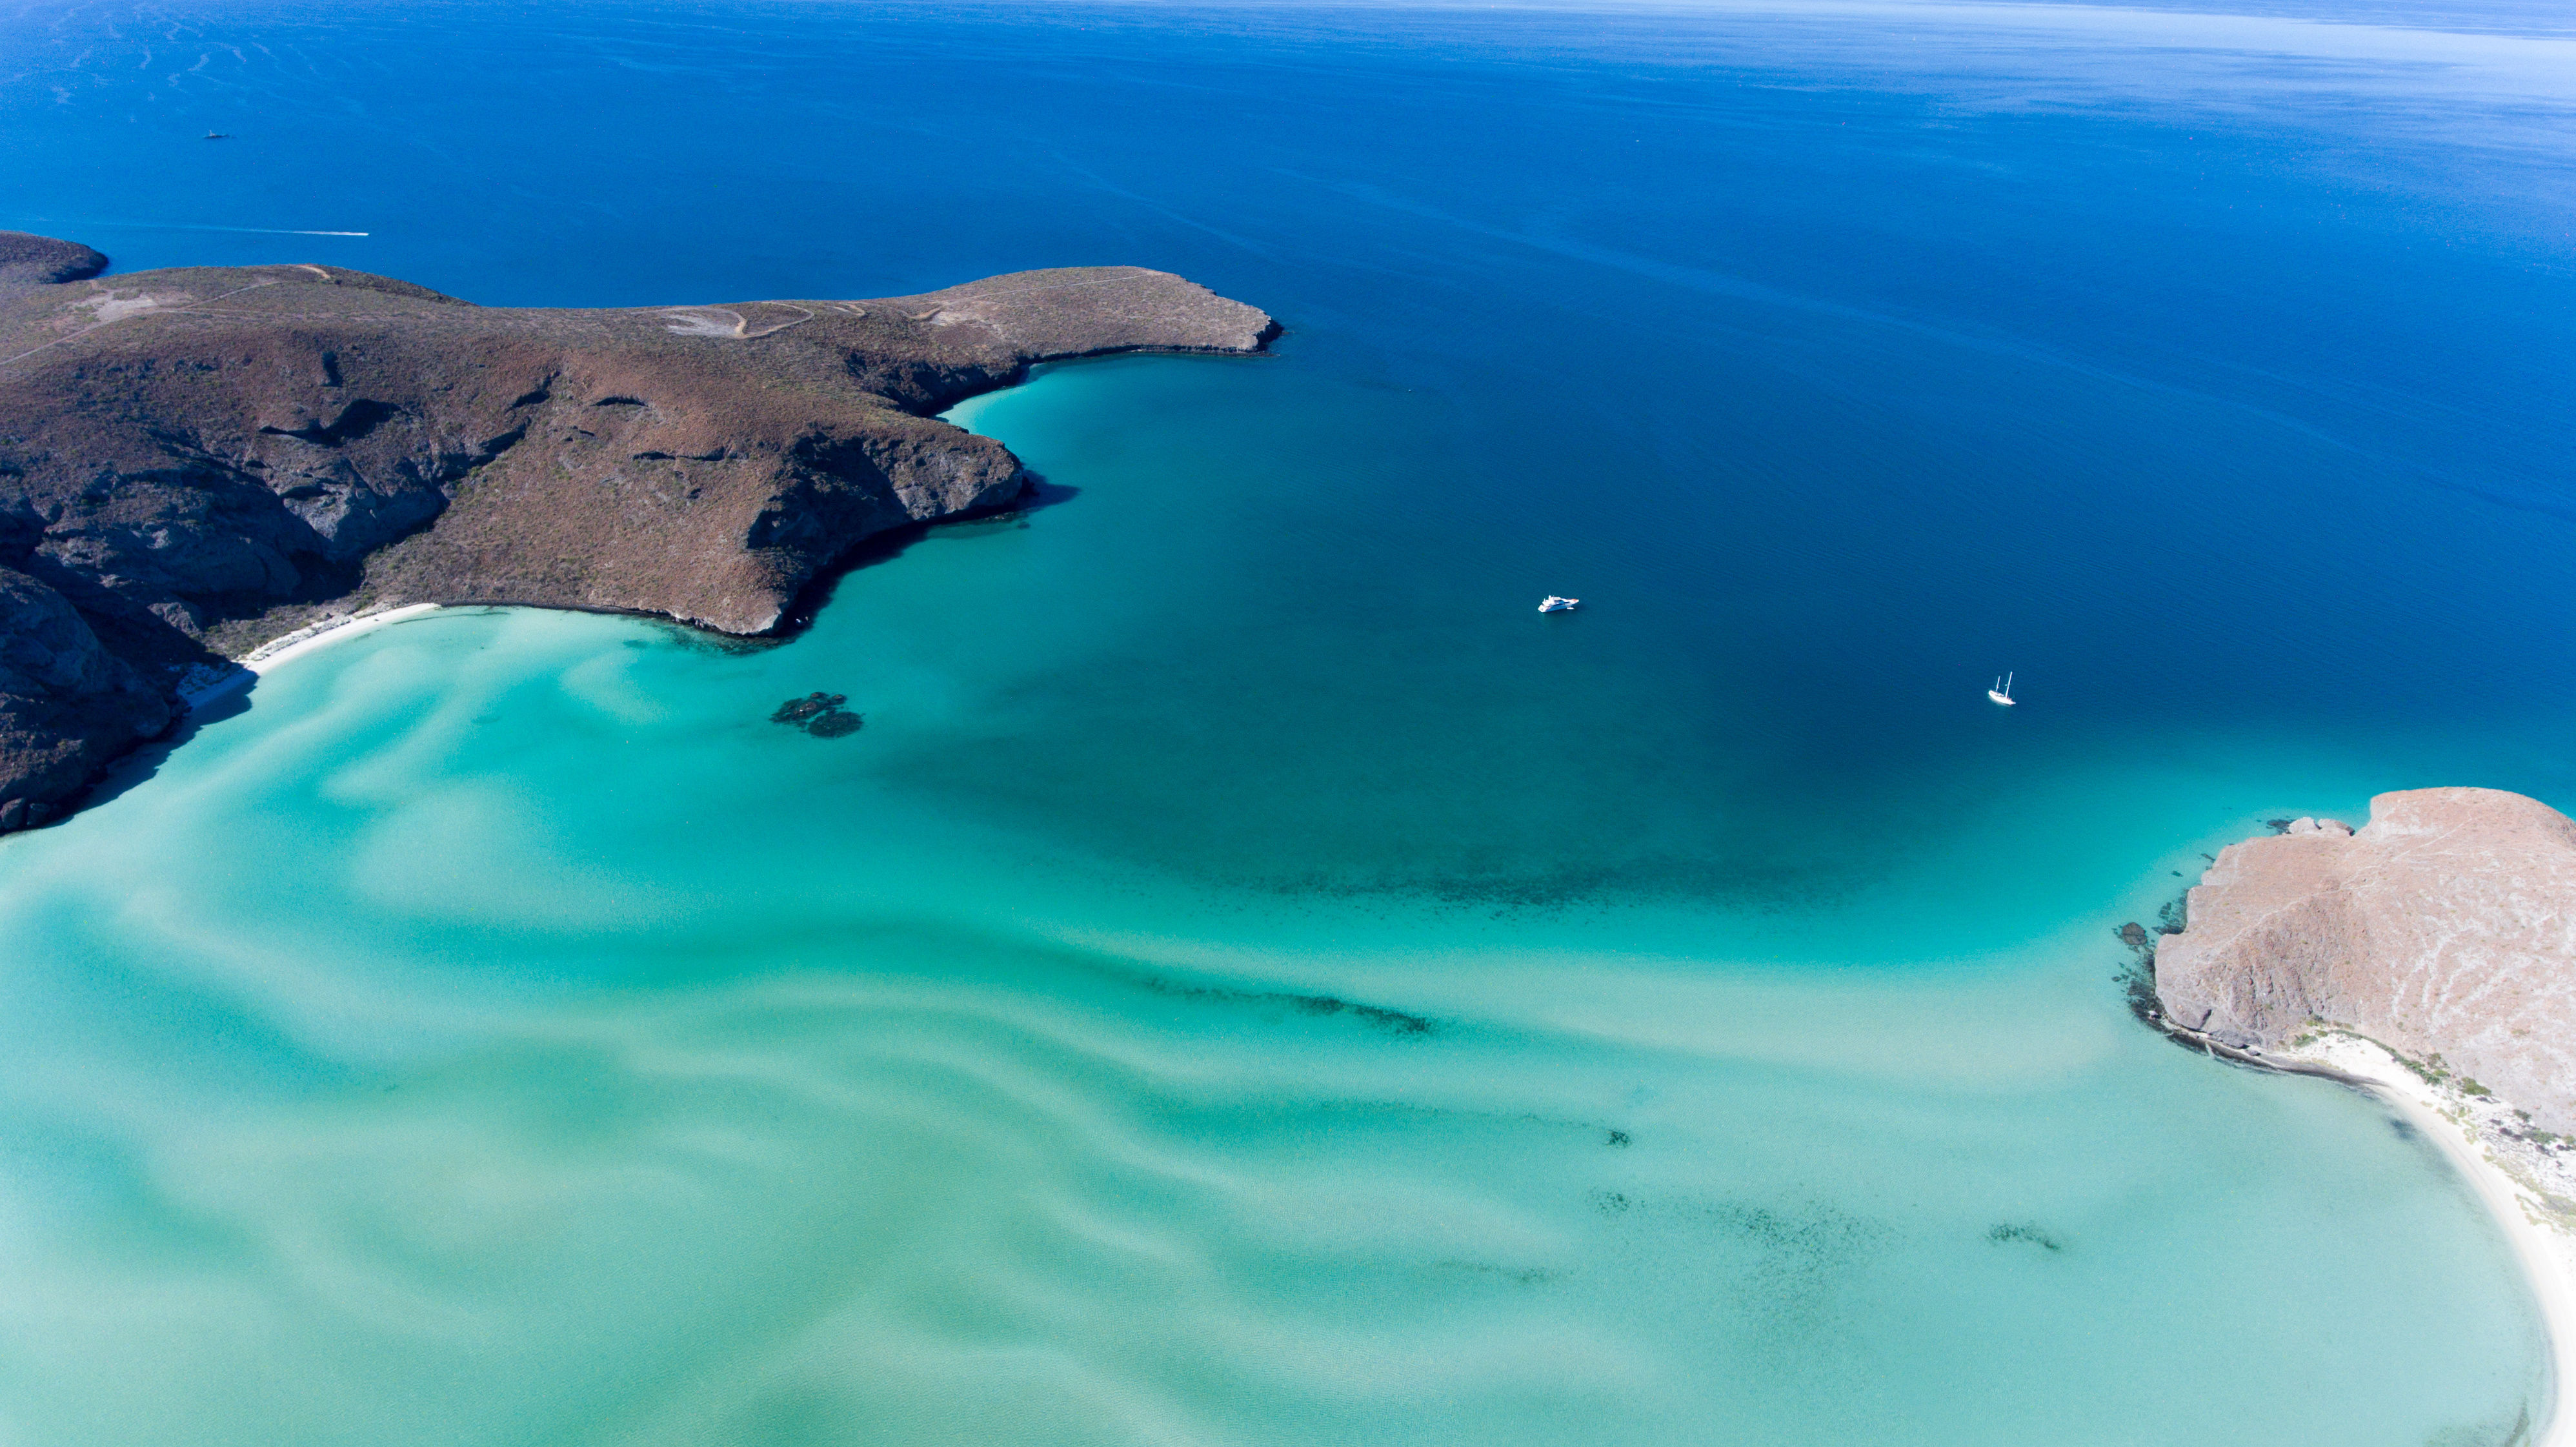 Aerial view of rocky headland, boats and blue waters of Balandra beach, Baja California Sur, Mexico.